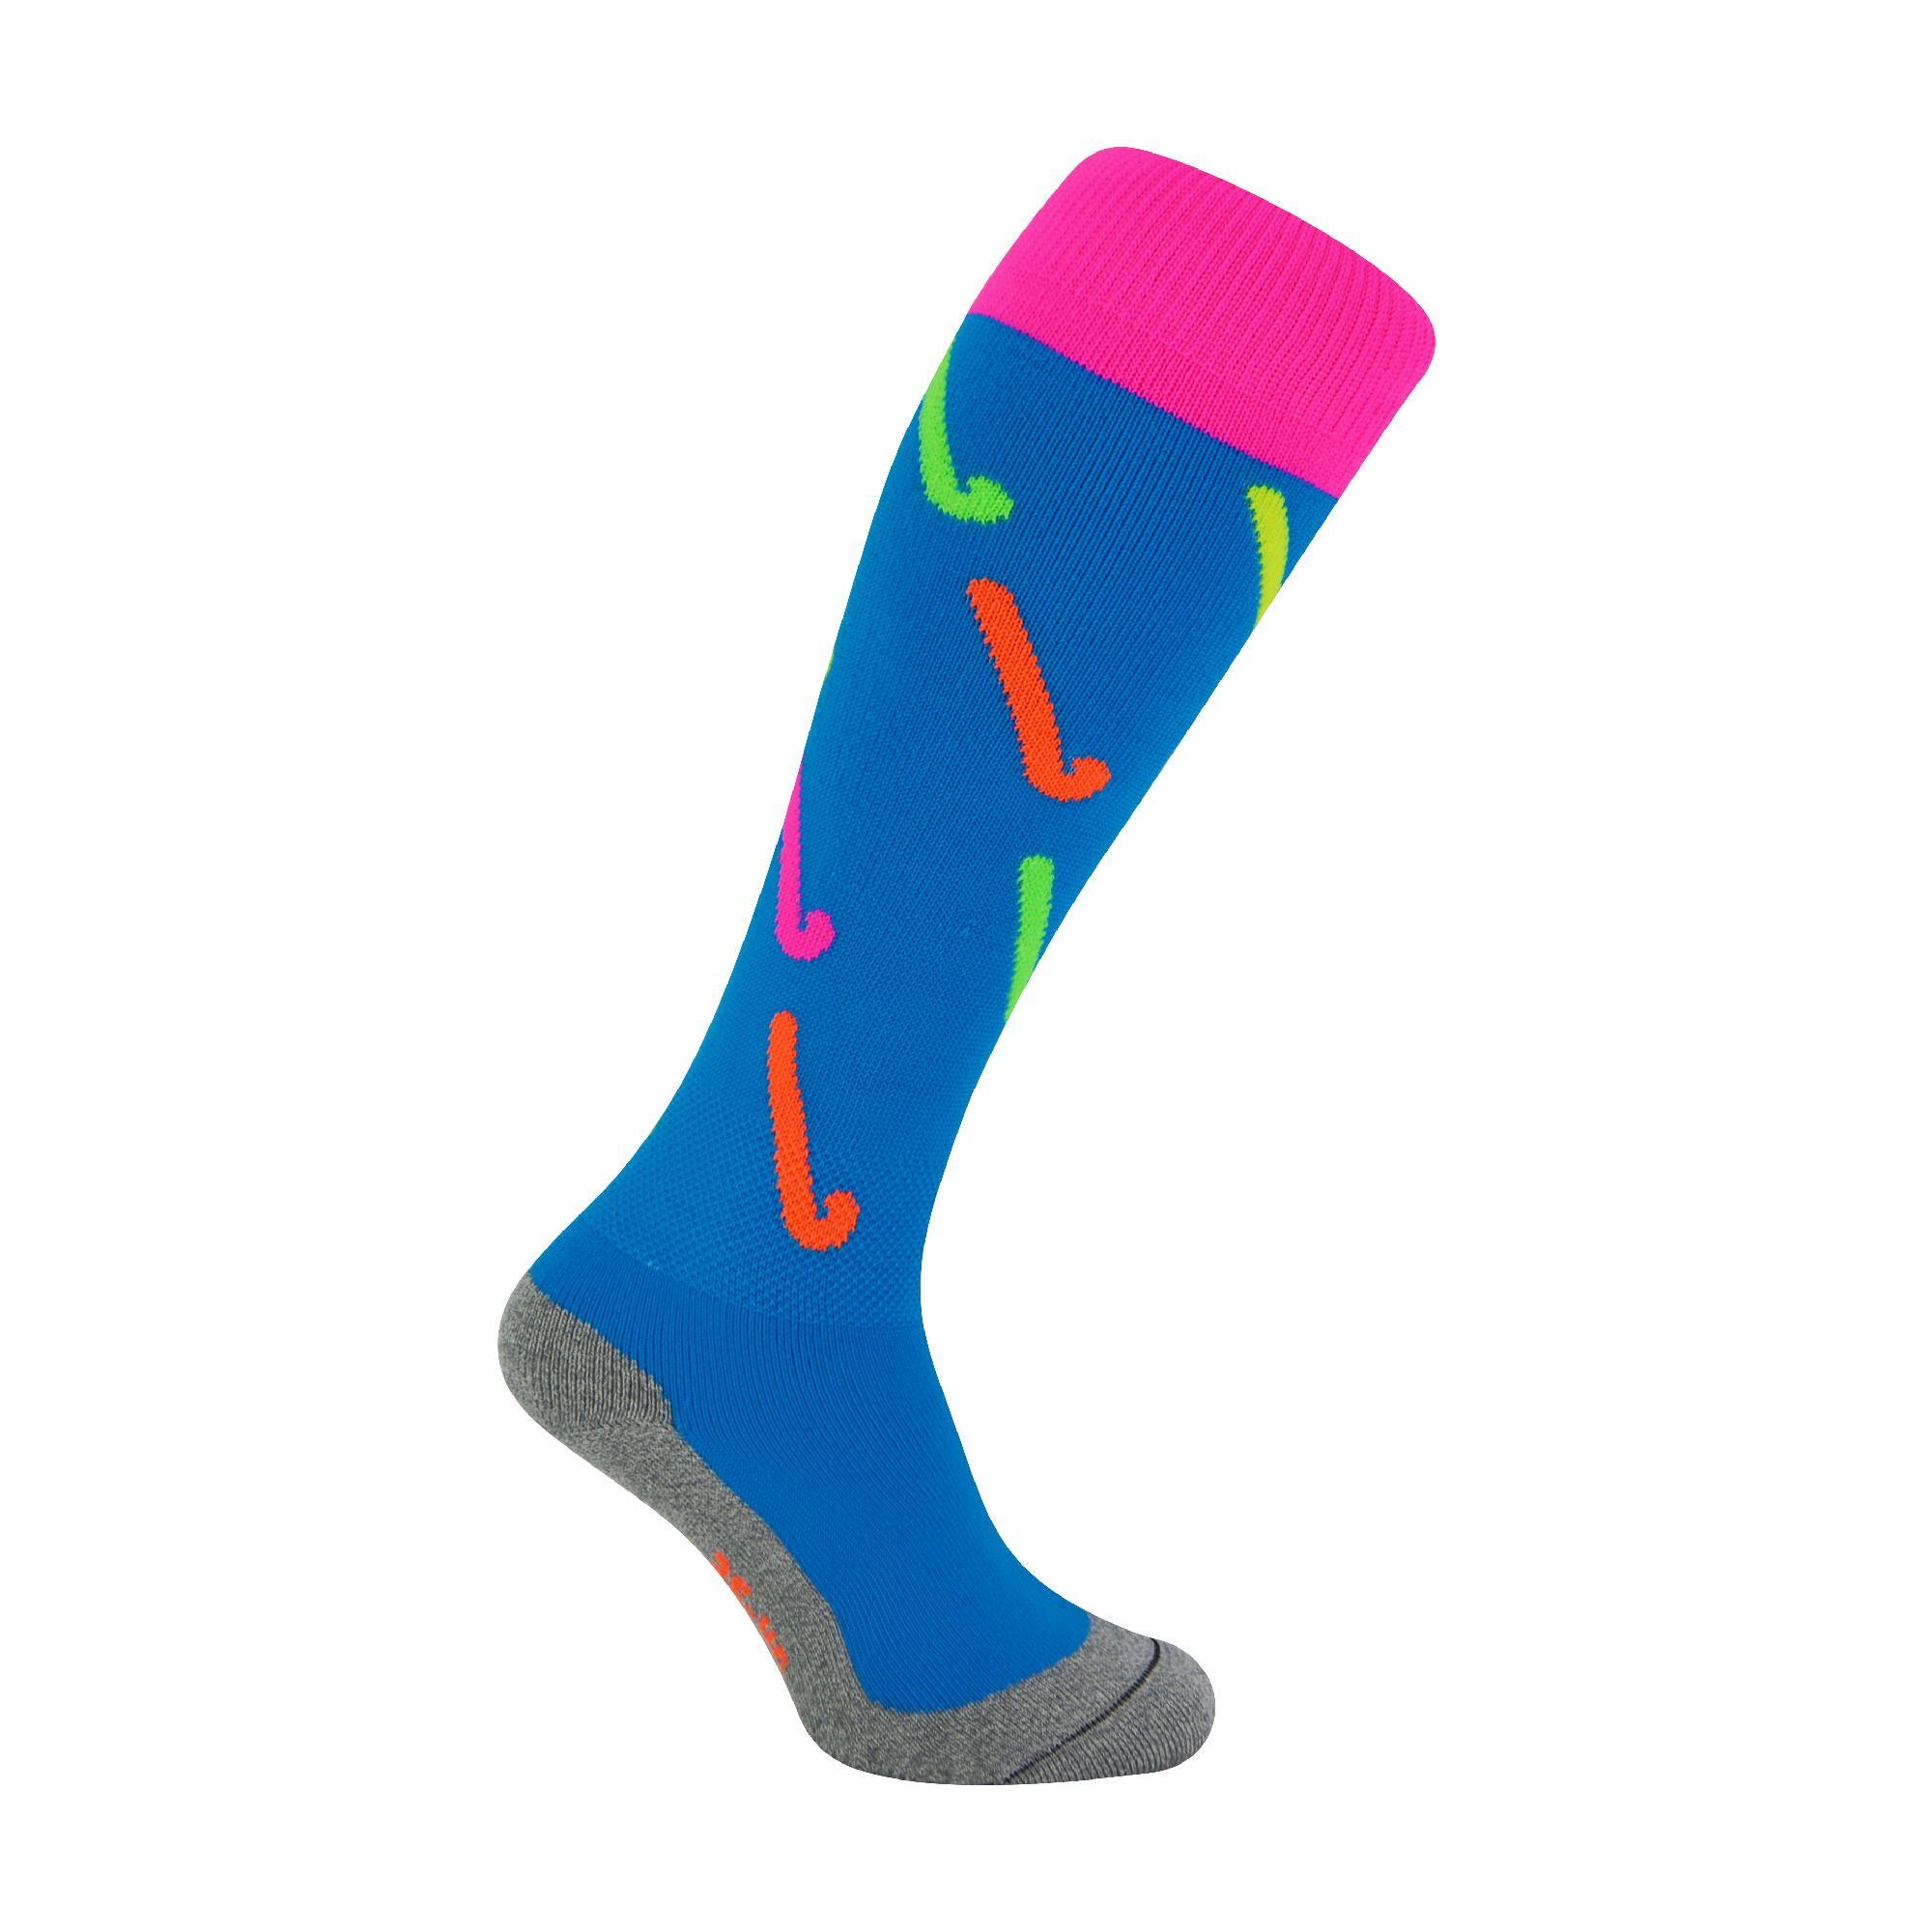 Knee High Hockey Socks with Hockey Stick Designs | Kids Sizes 1/4